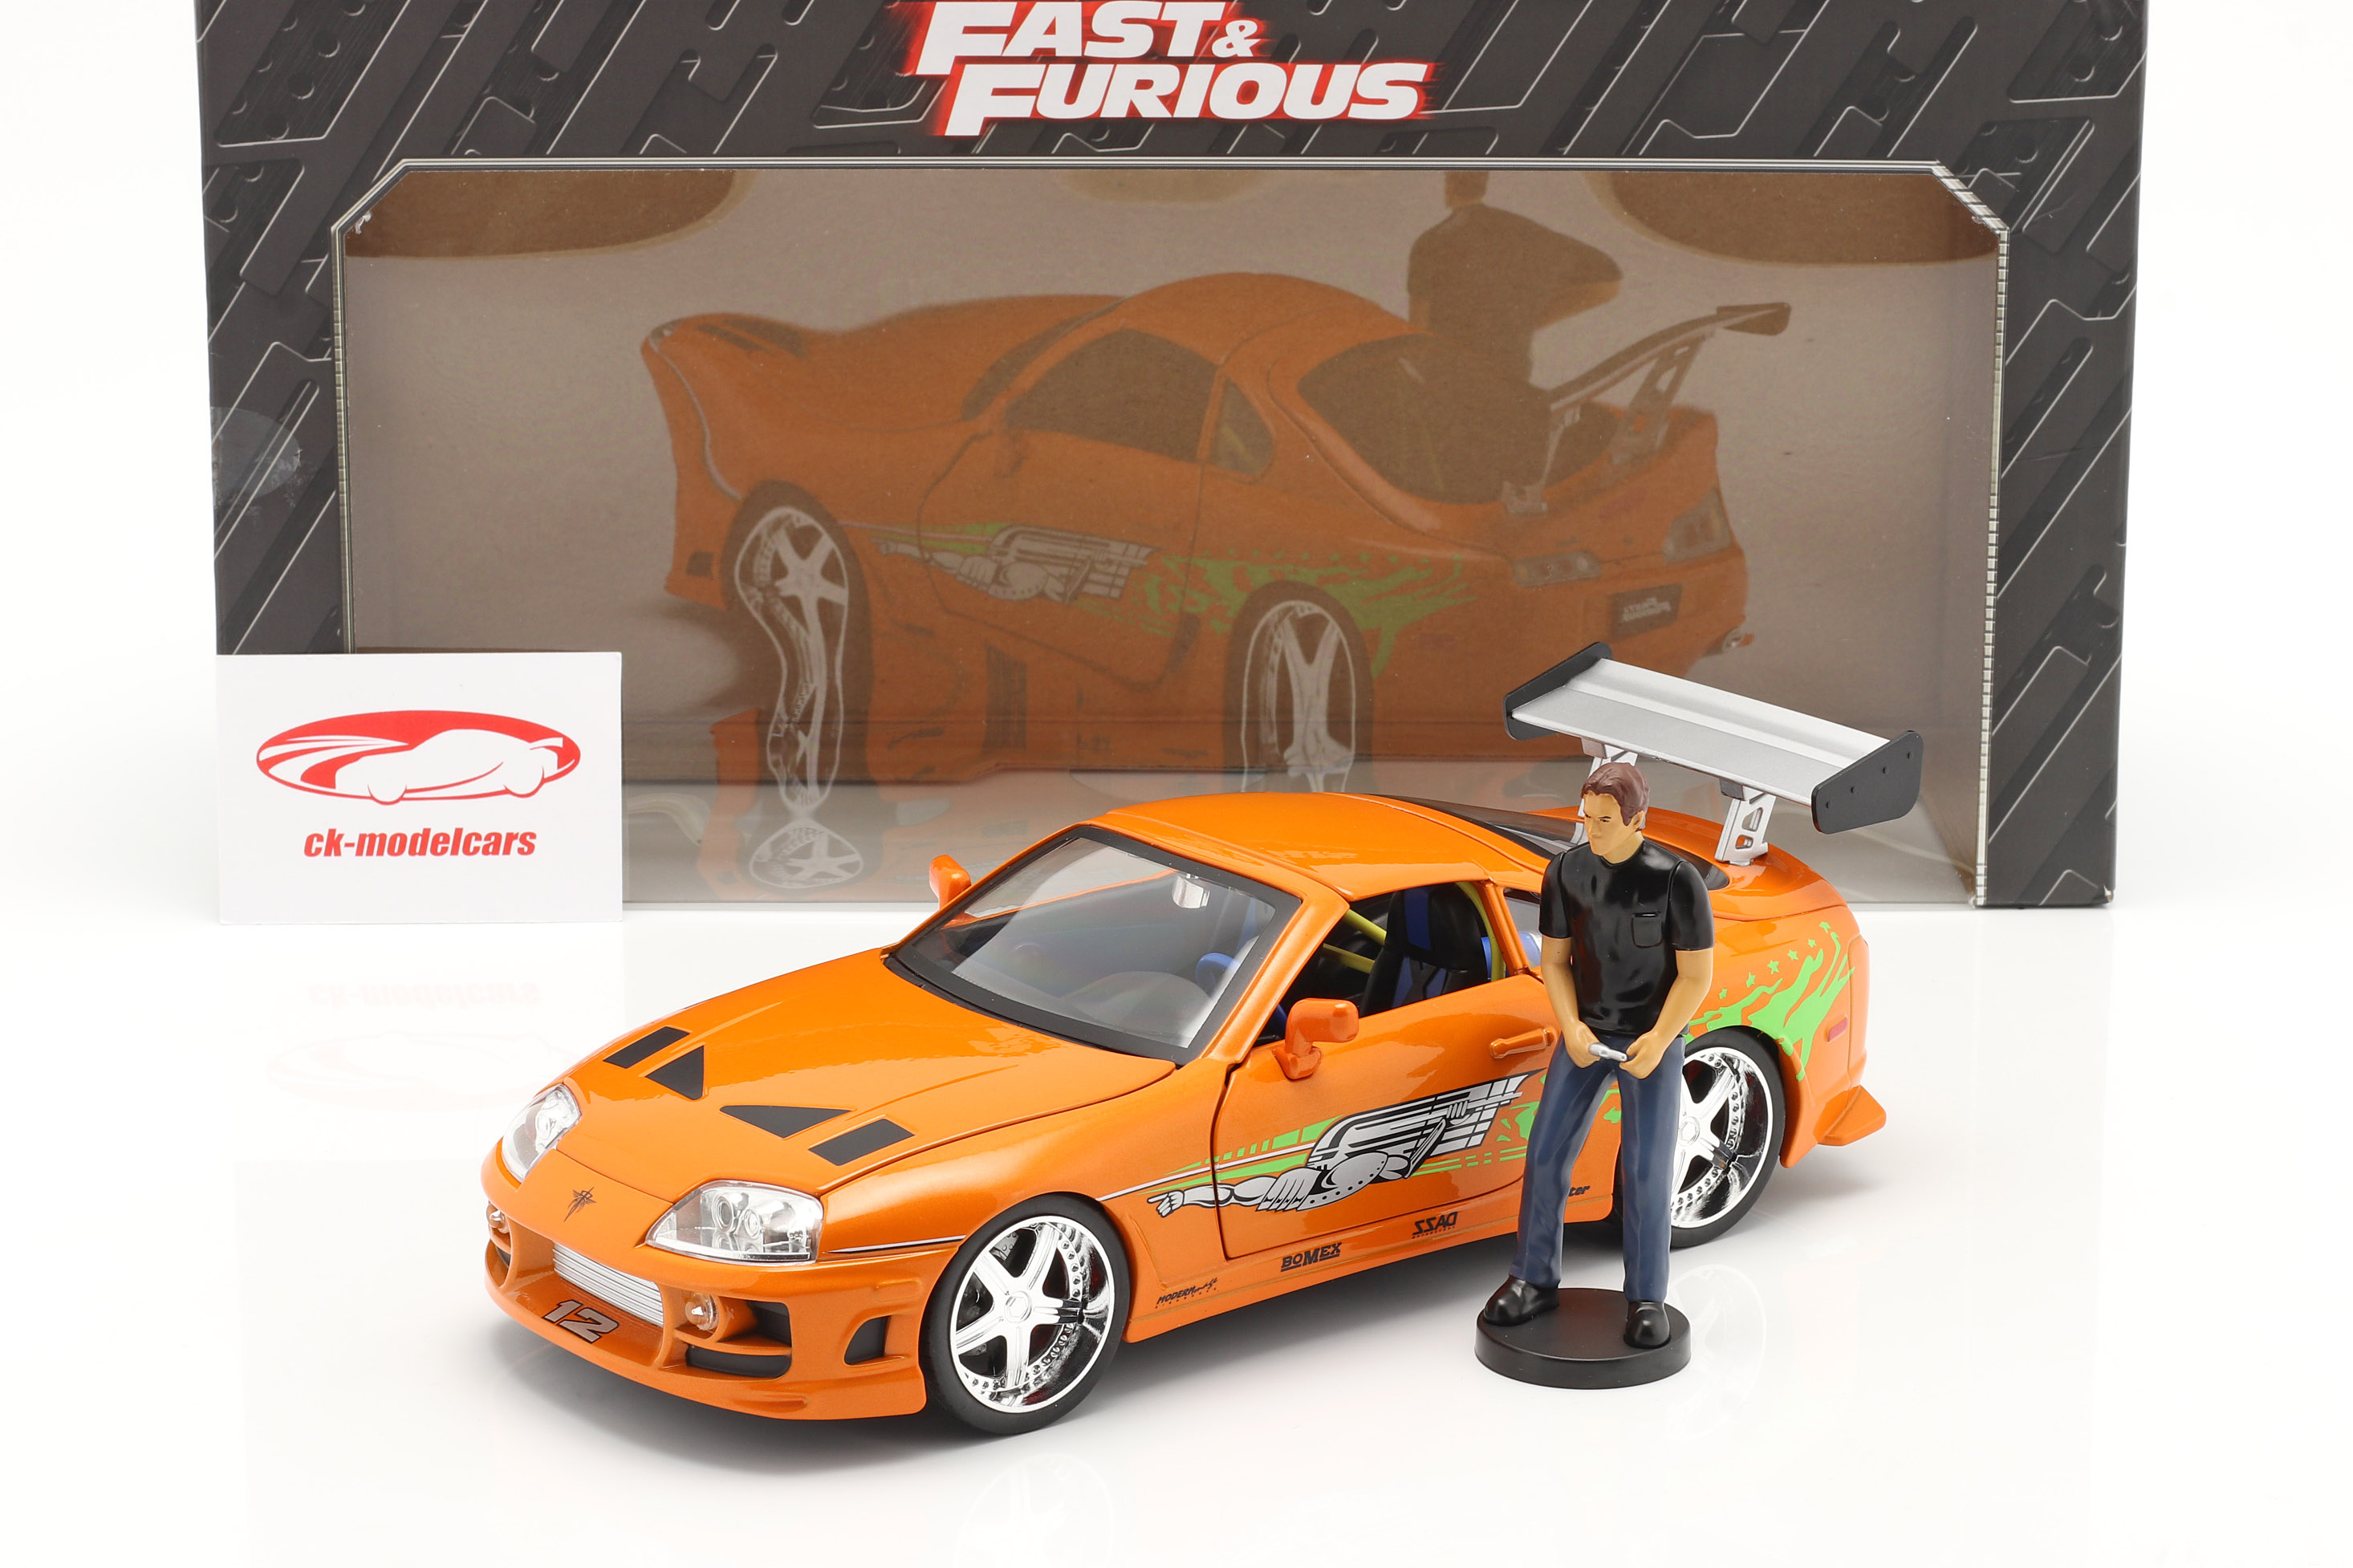 Brian's Toyota Supra 1995 Film Fast & Furious (2001) Med figur 1:18 Jada Toys